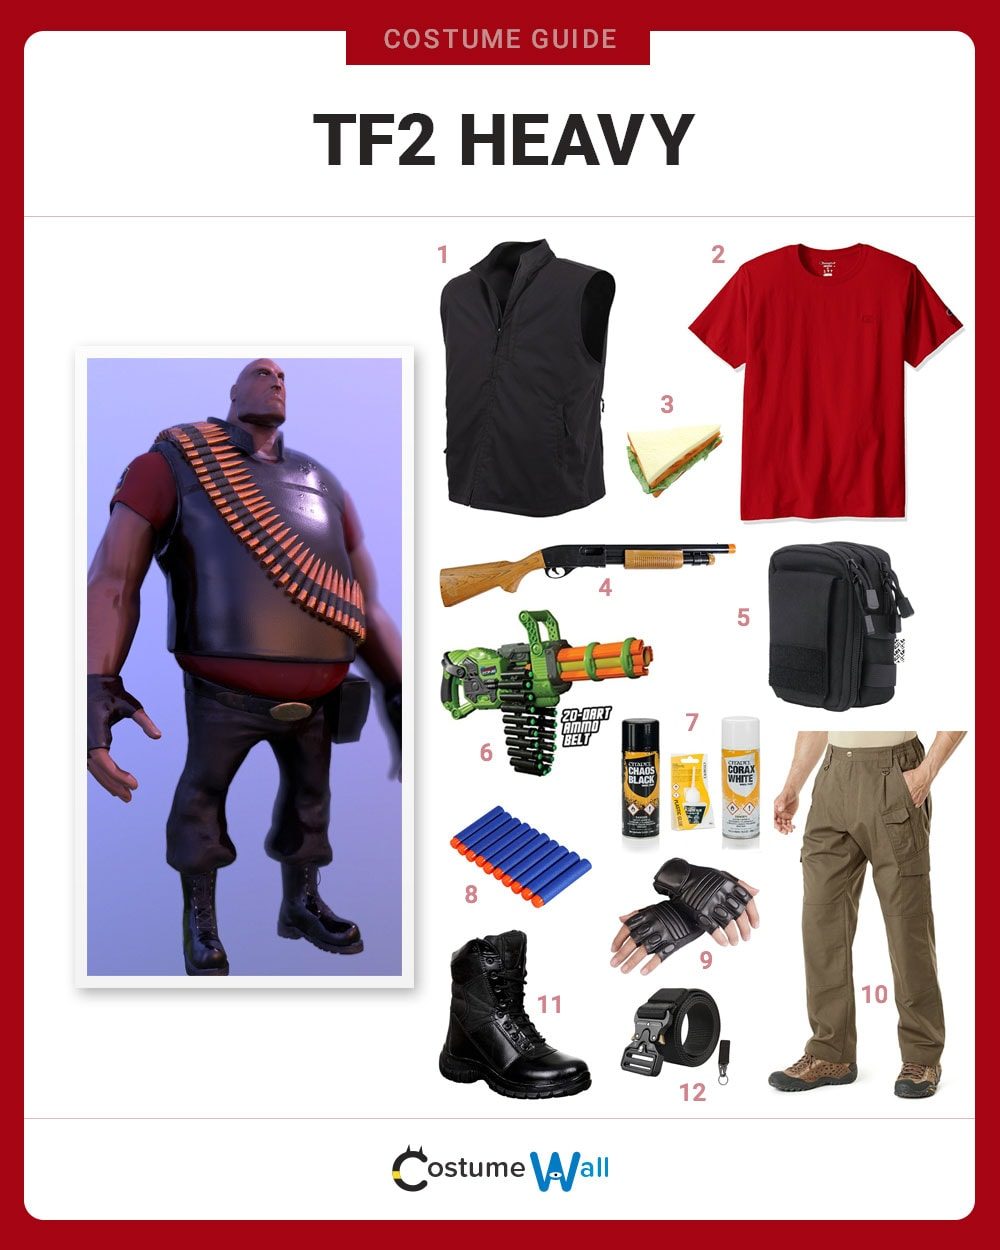 TF2 Heavy Costume Guide